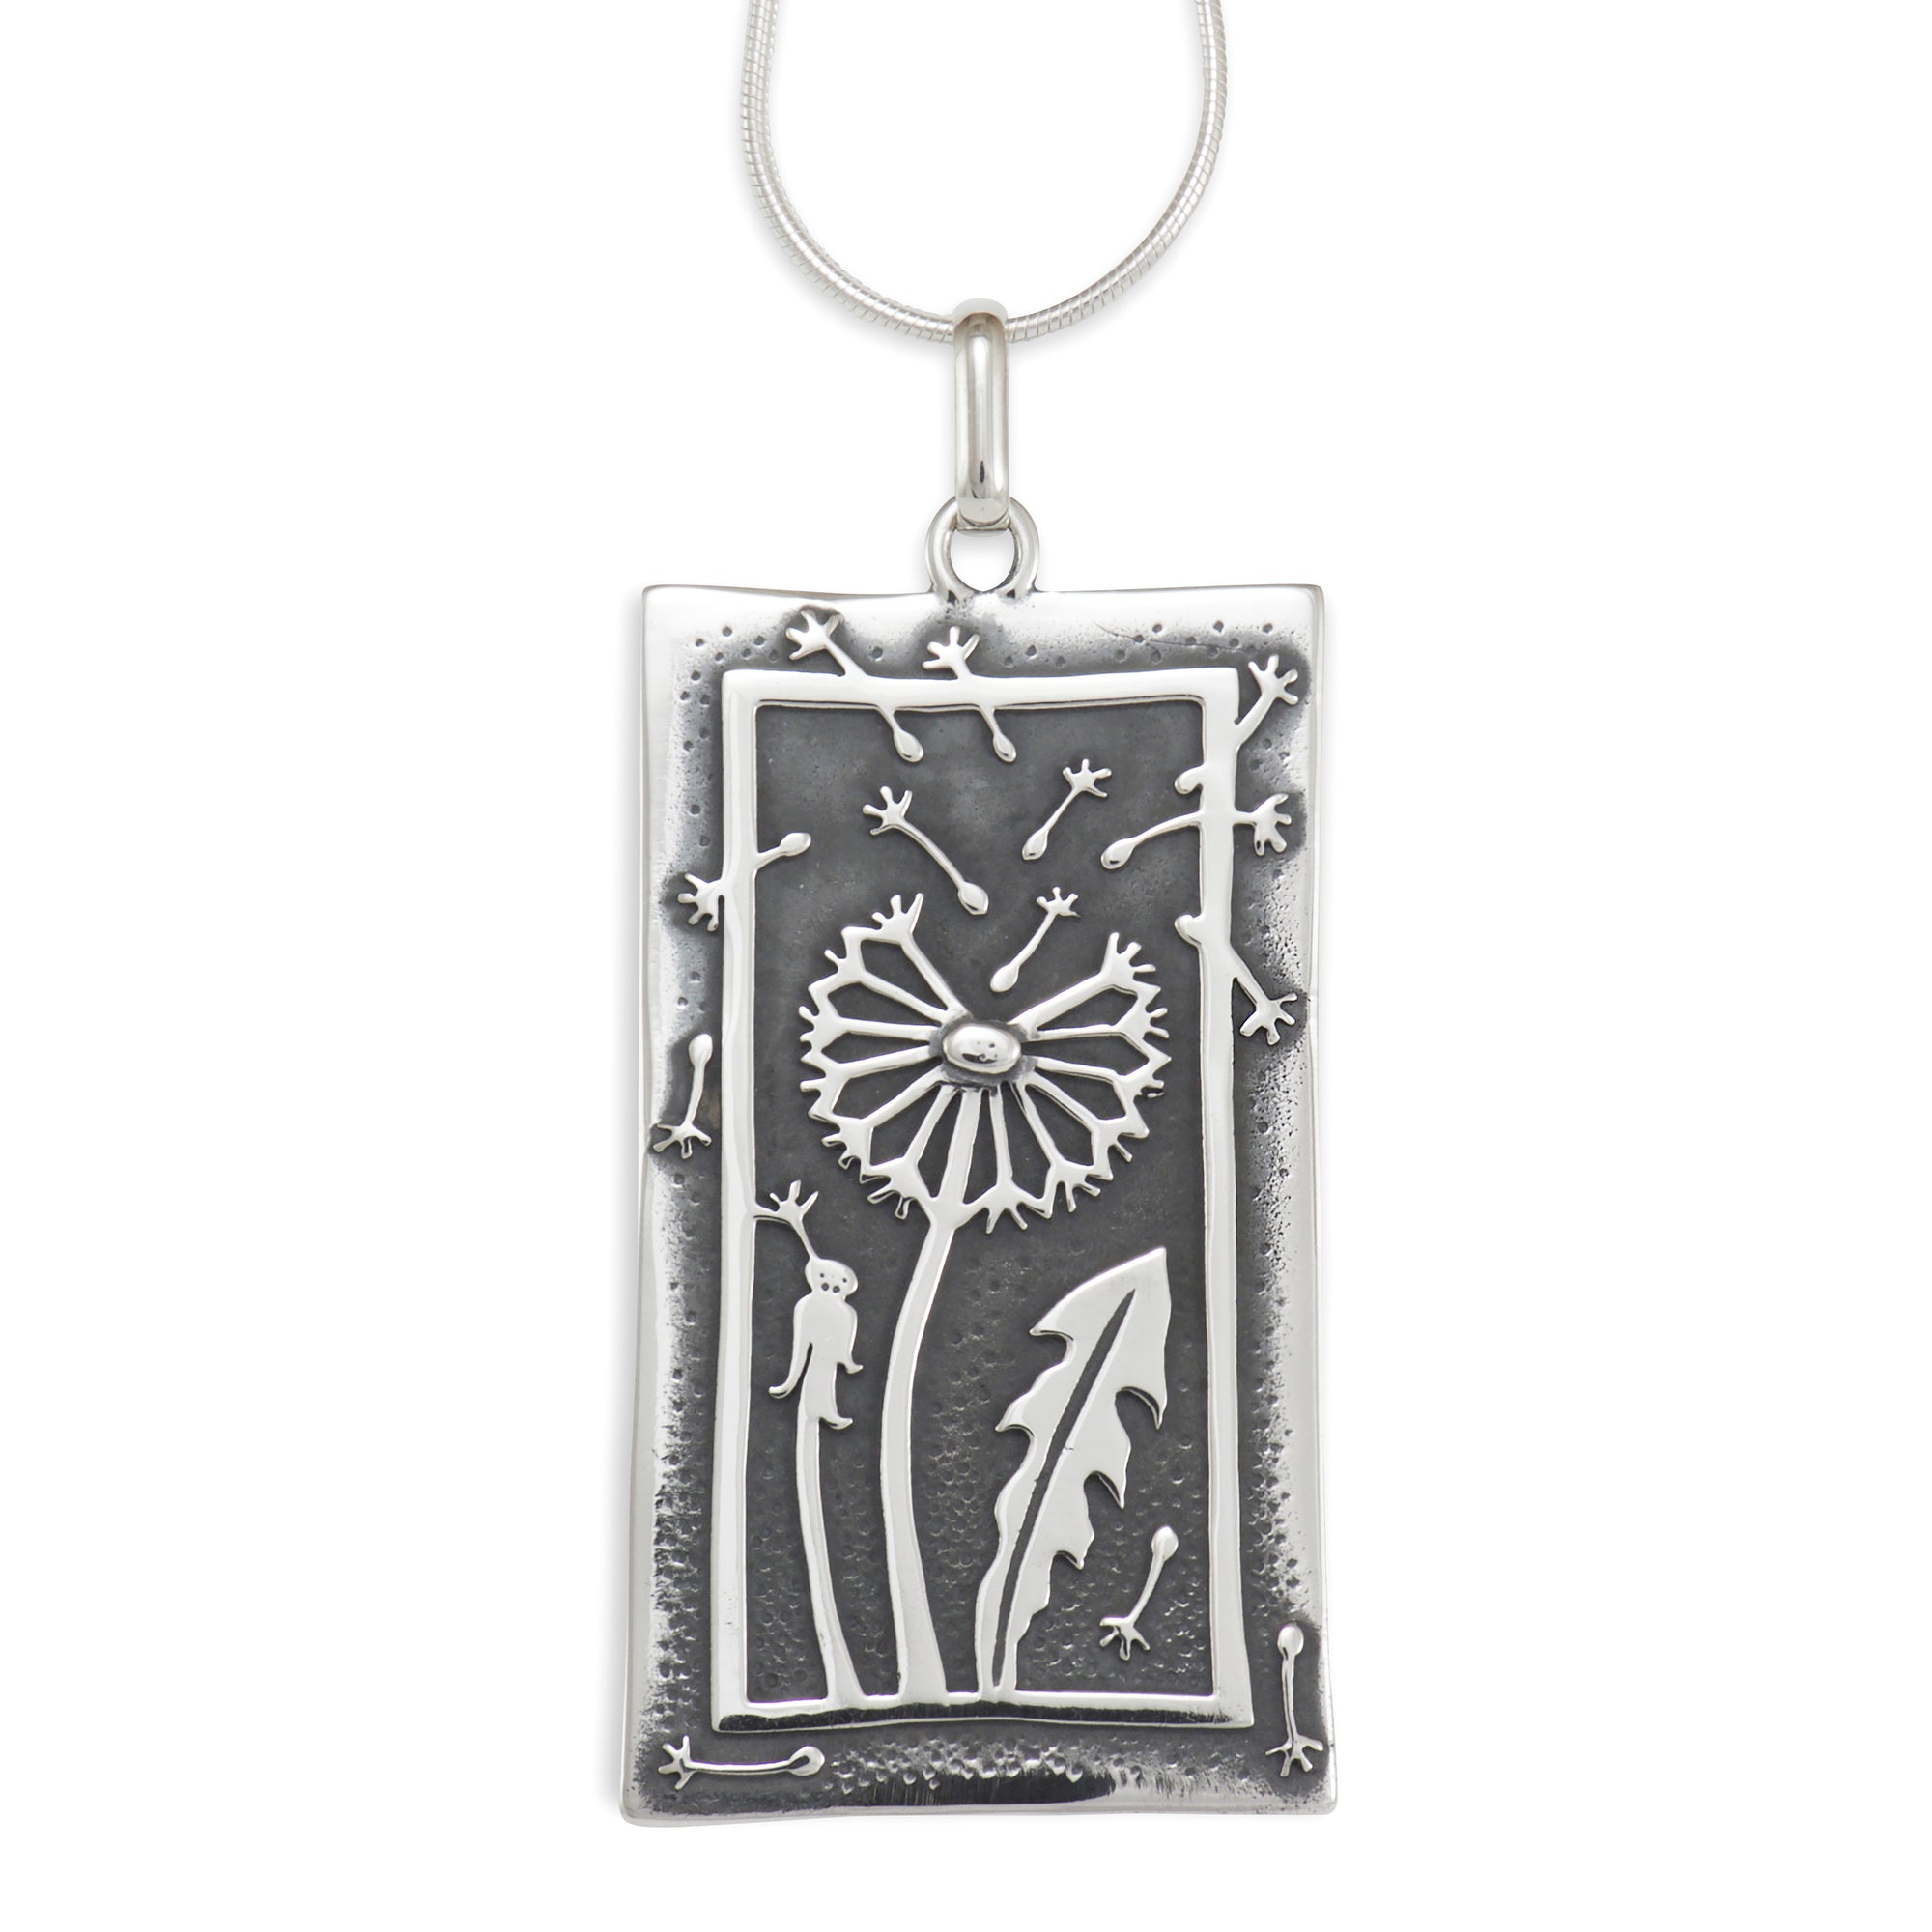 Dandelion silver pendant